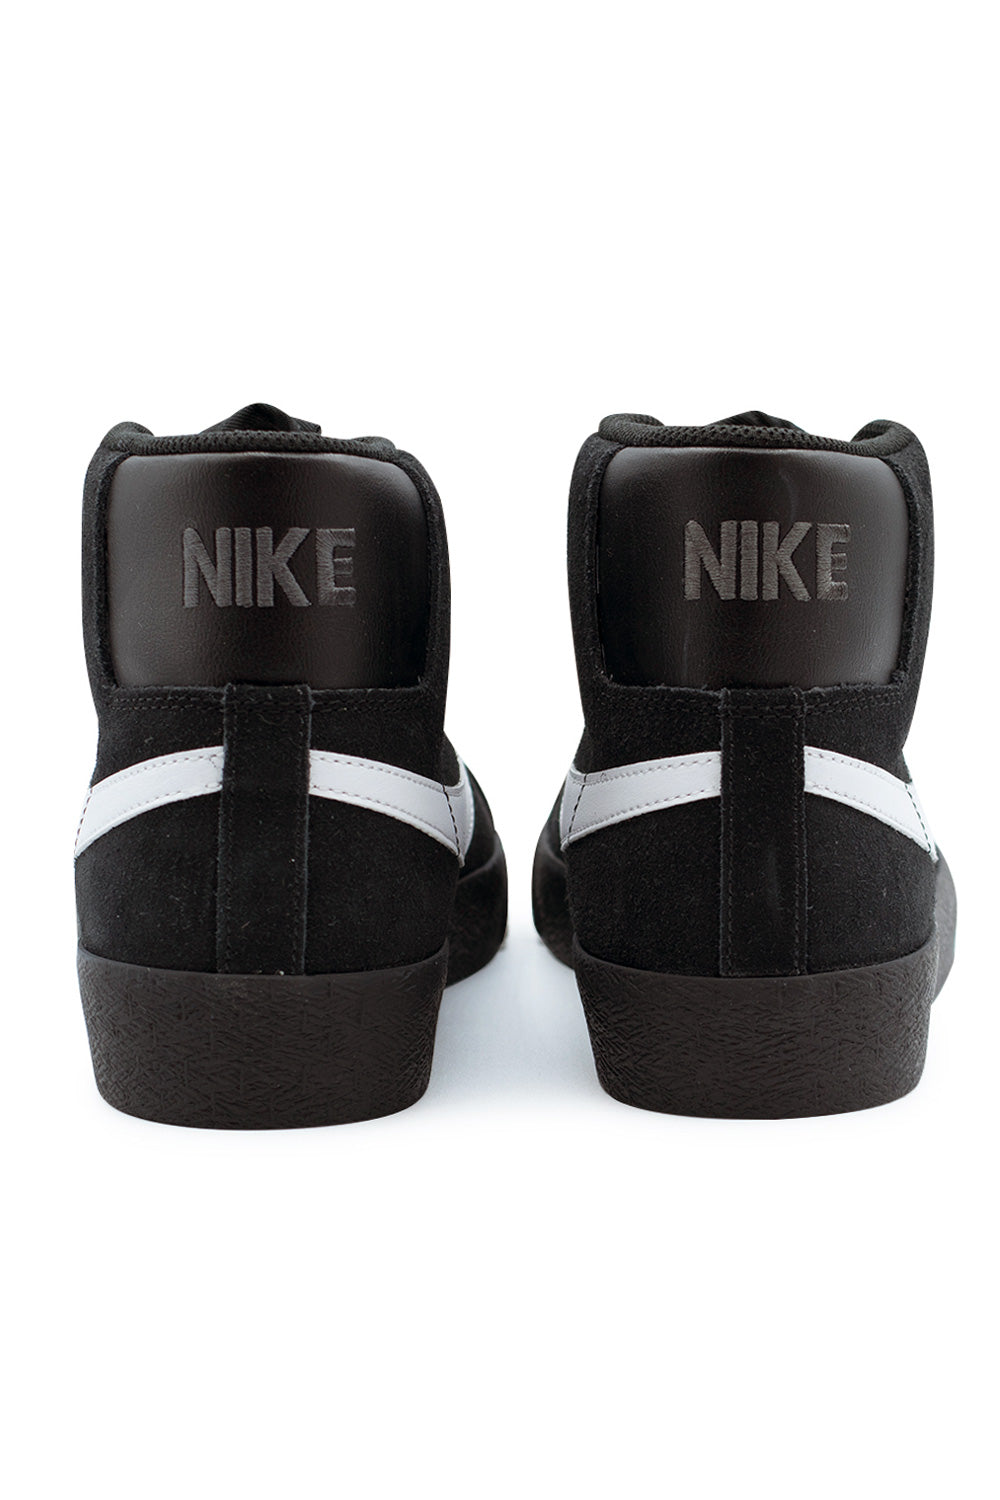 Nike SB Zoom Blazer Mid Shoe Black / White / Black / Black - BONKERS